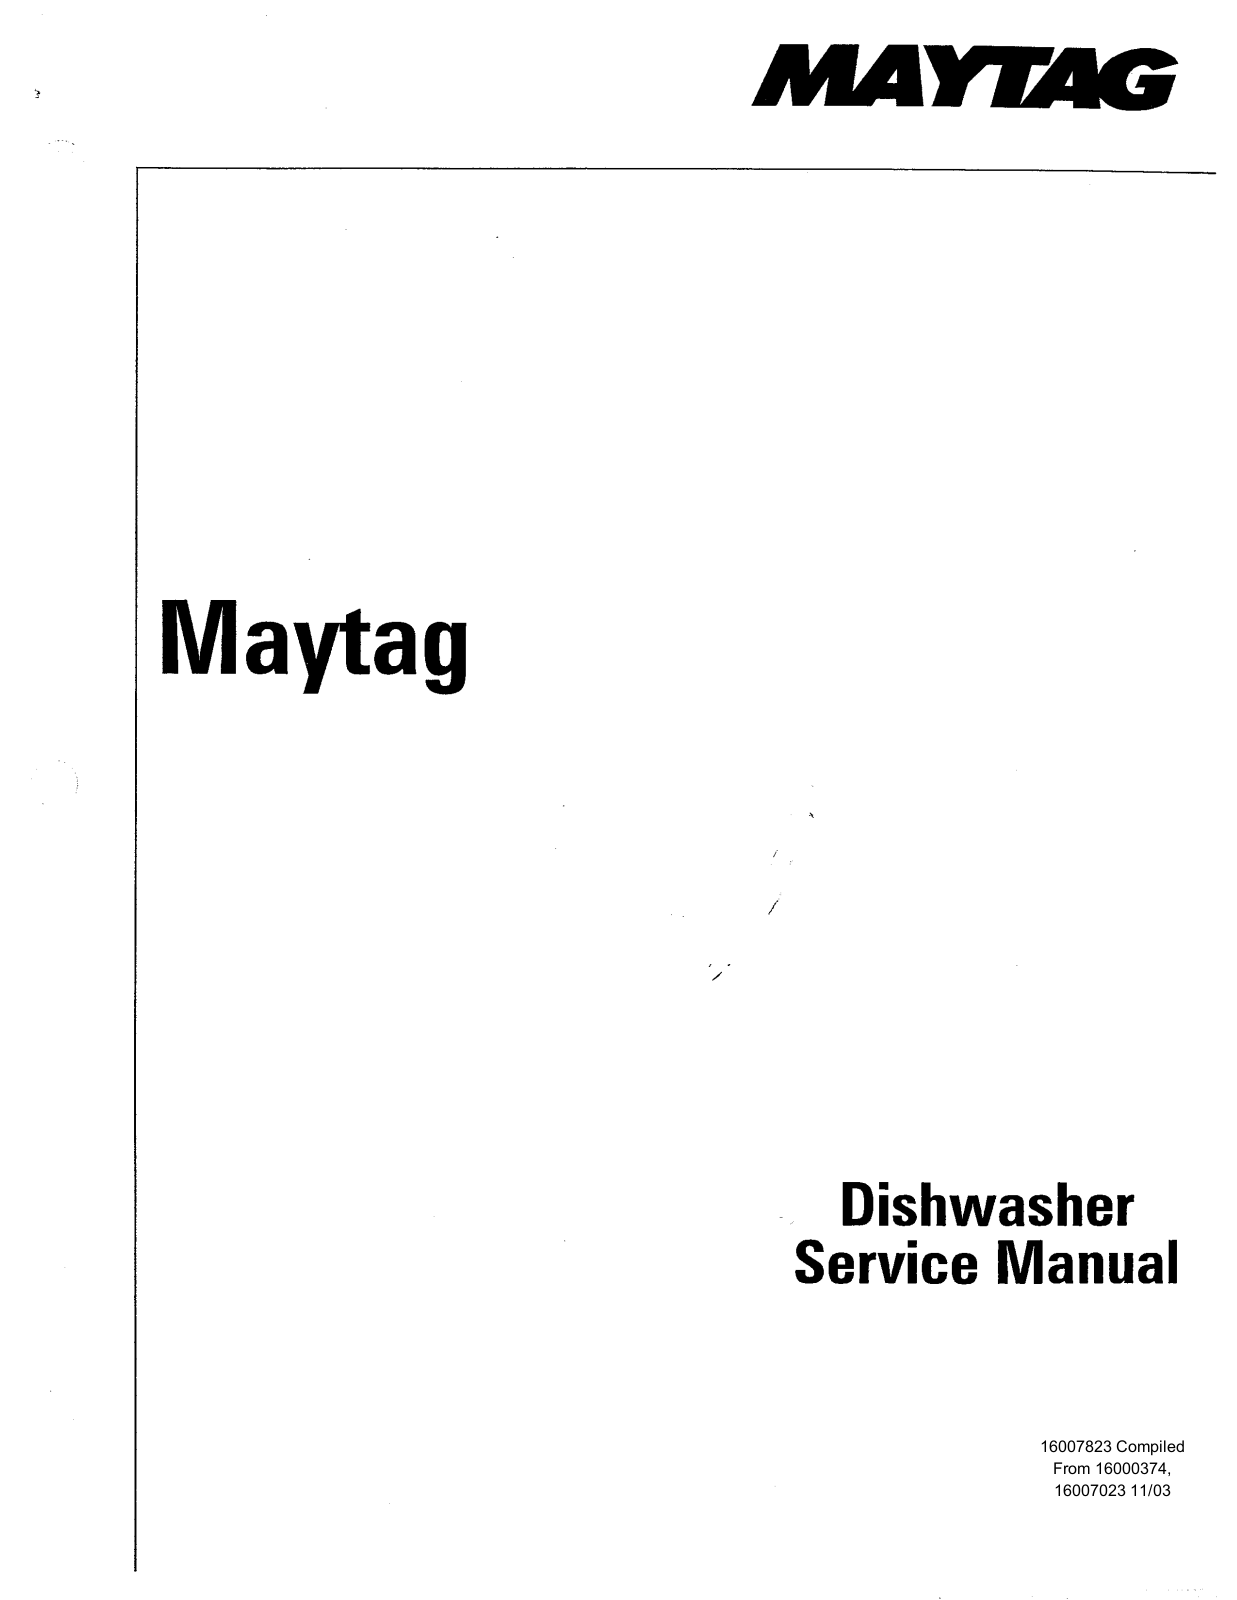 Maytag DWU8460, DWU7910, DWU8450, DWU7600, DWU4910 Service Manual